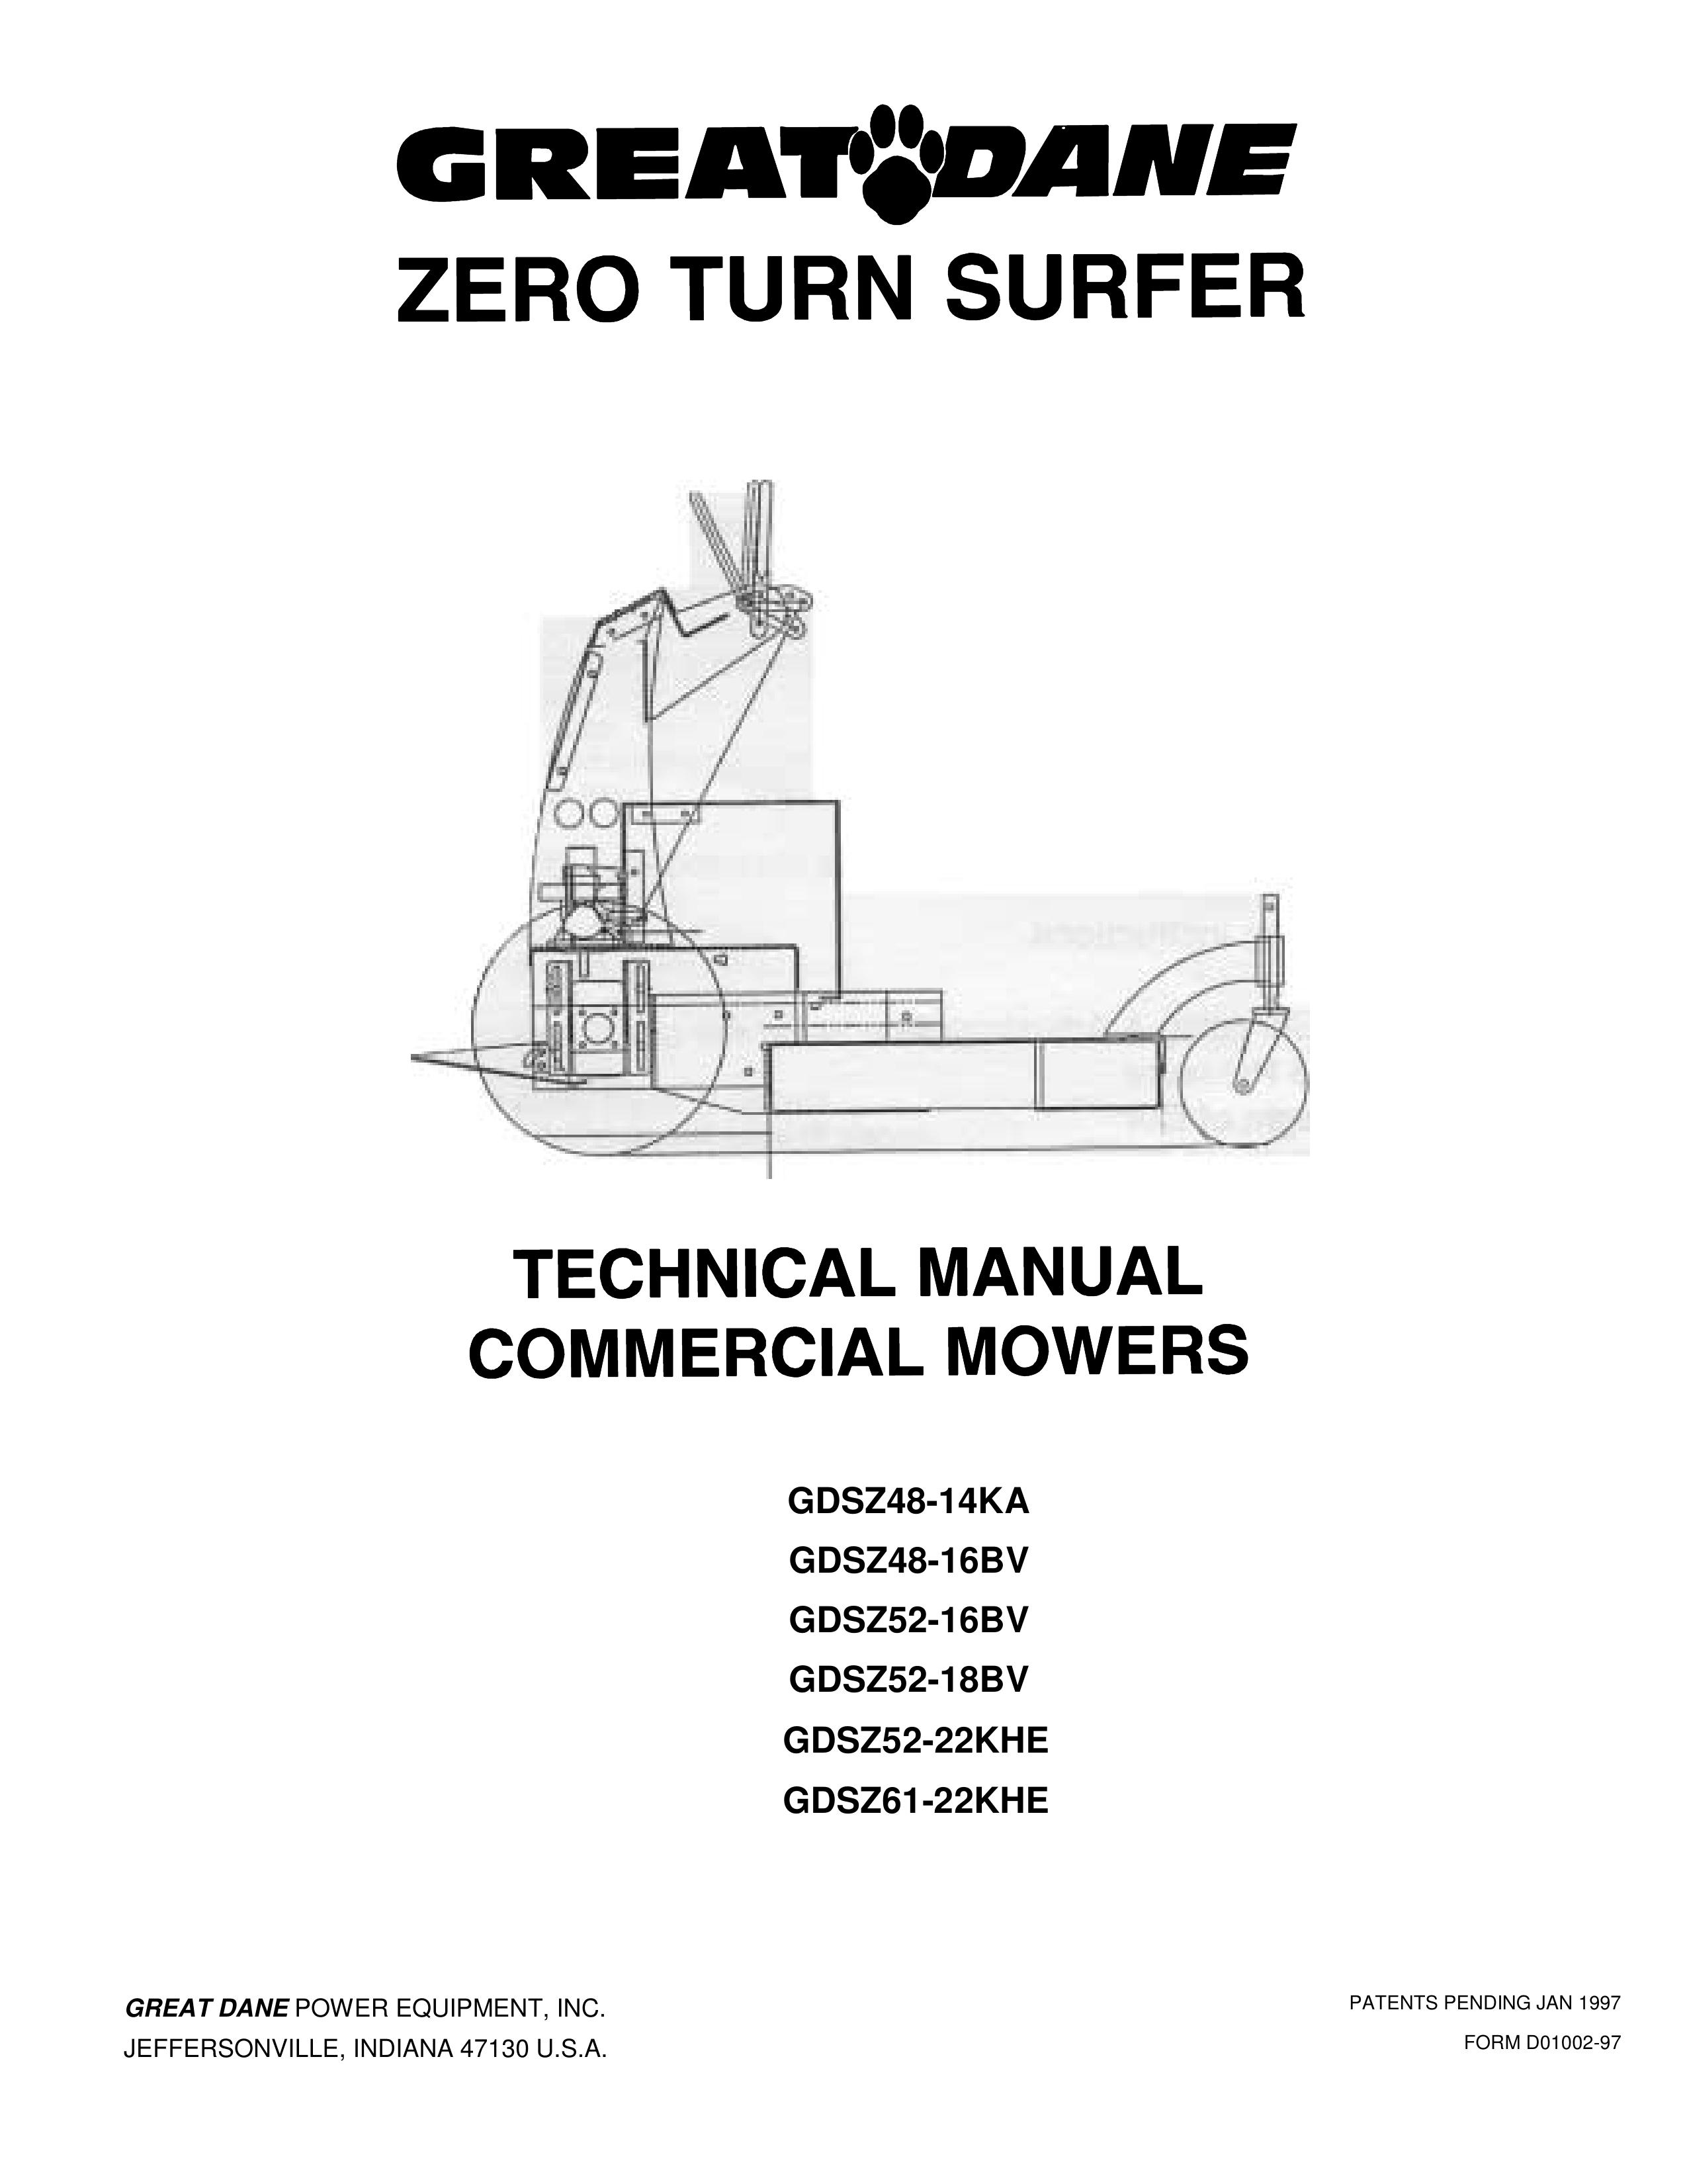 Great Dane GDSZ52-22KHE Lawn Mower User Manual